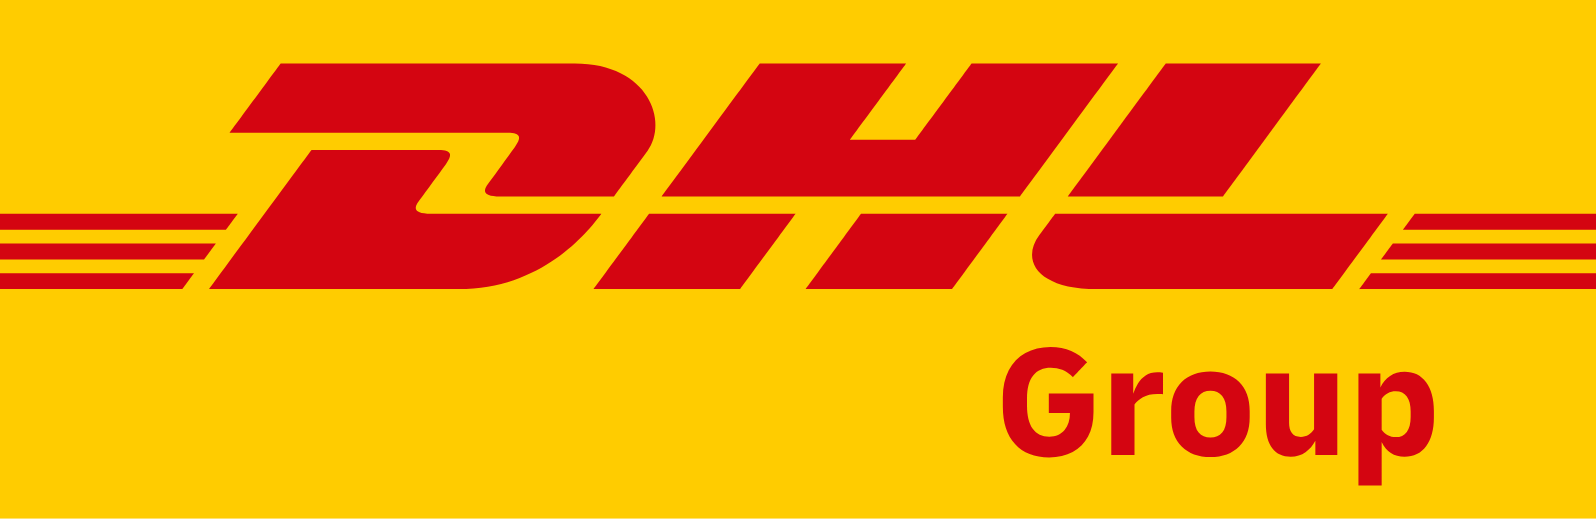 DHL Group (Deutsche Post) logo (PNG transparent)